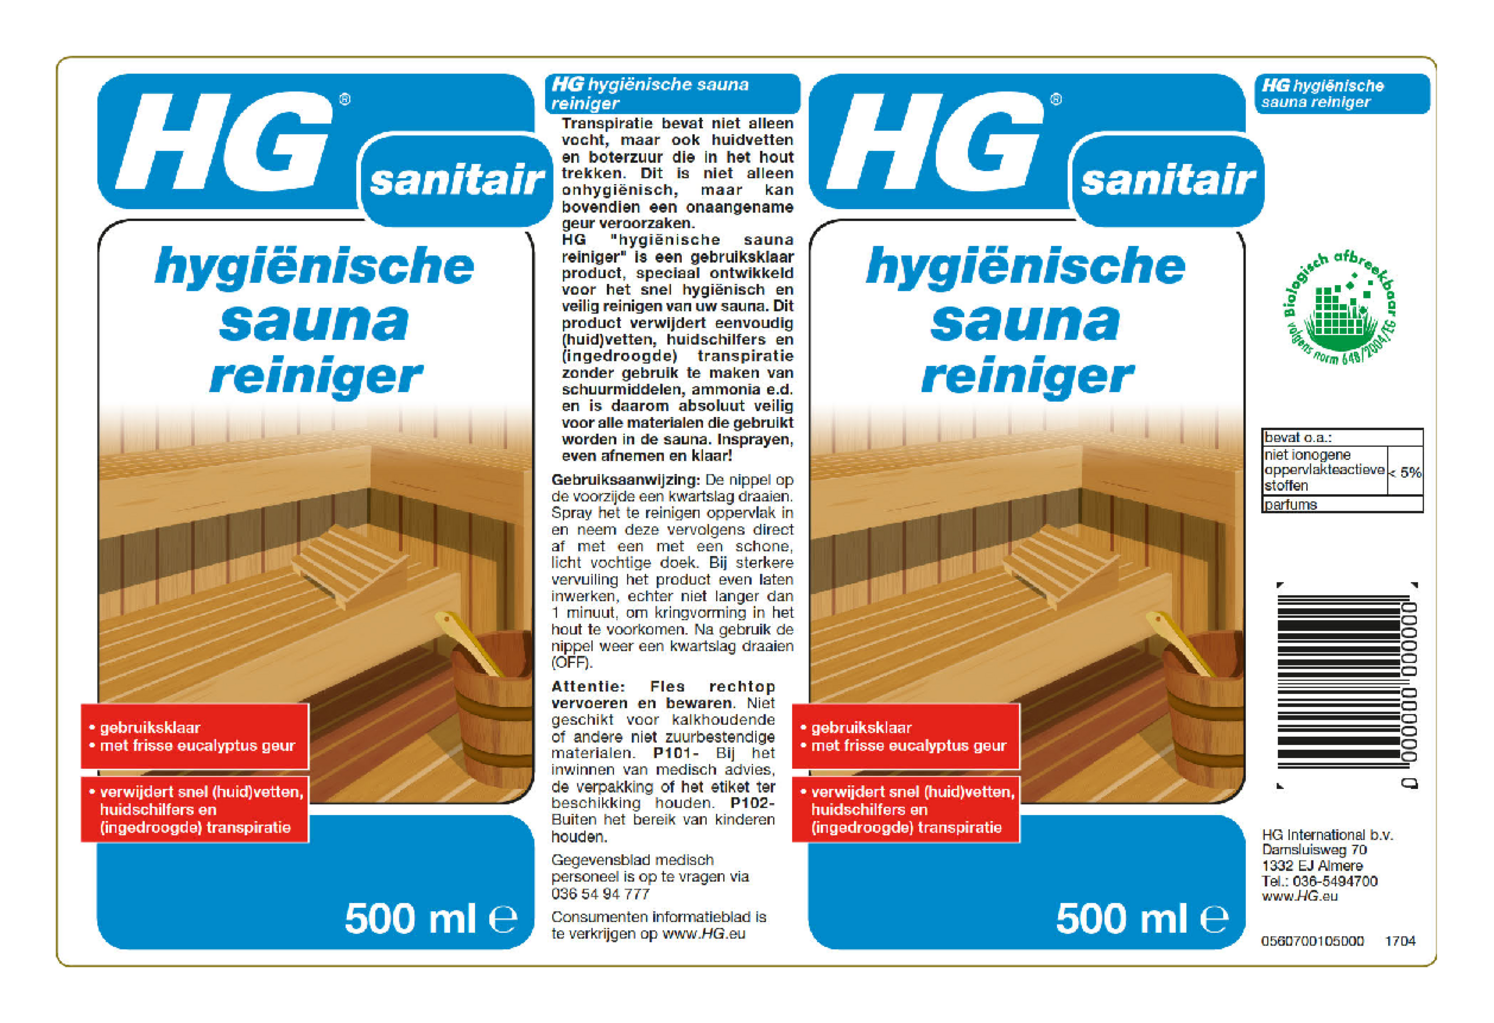 Hygiënische Sauna Reiniger afbeelding van document #1, etiket